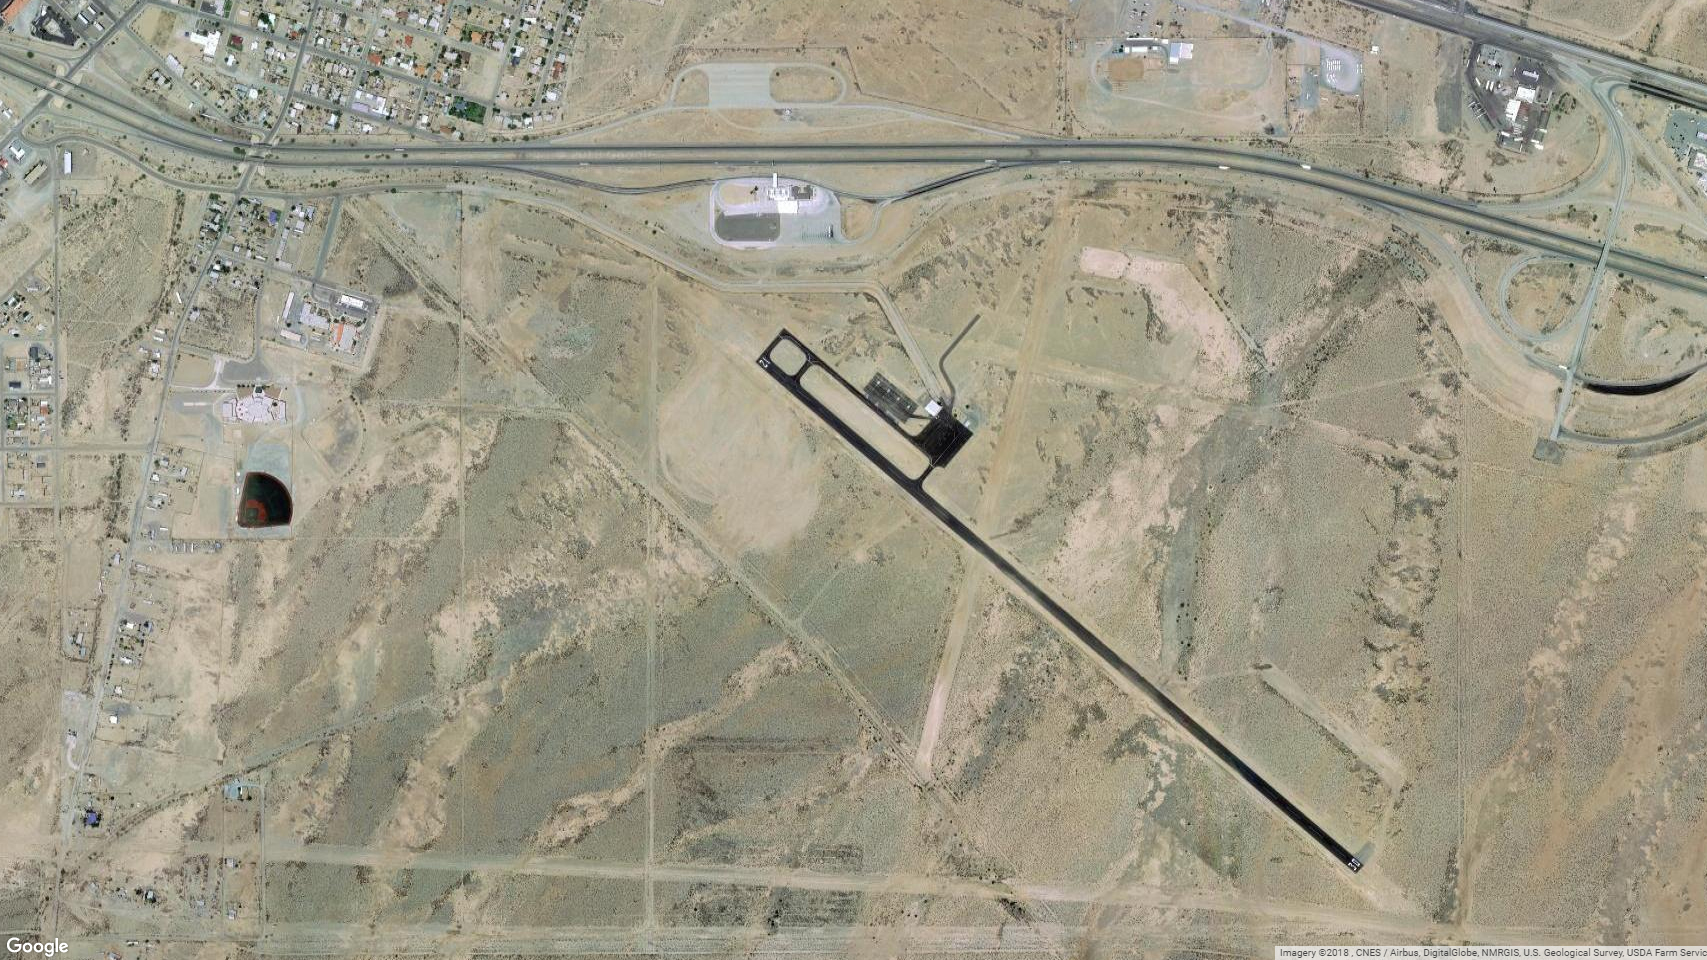 Lordsburg Municipal Airport image via Google.